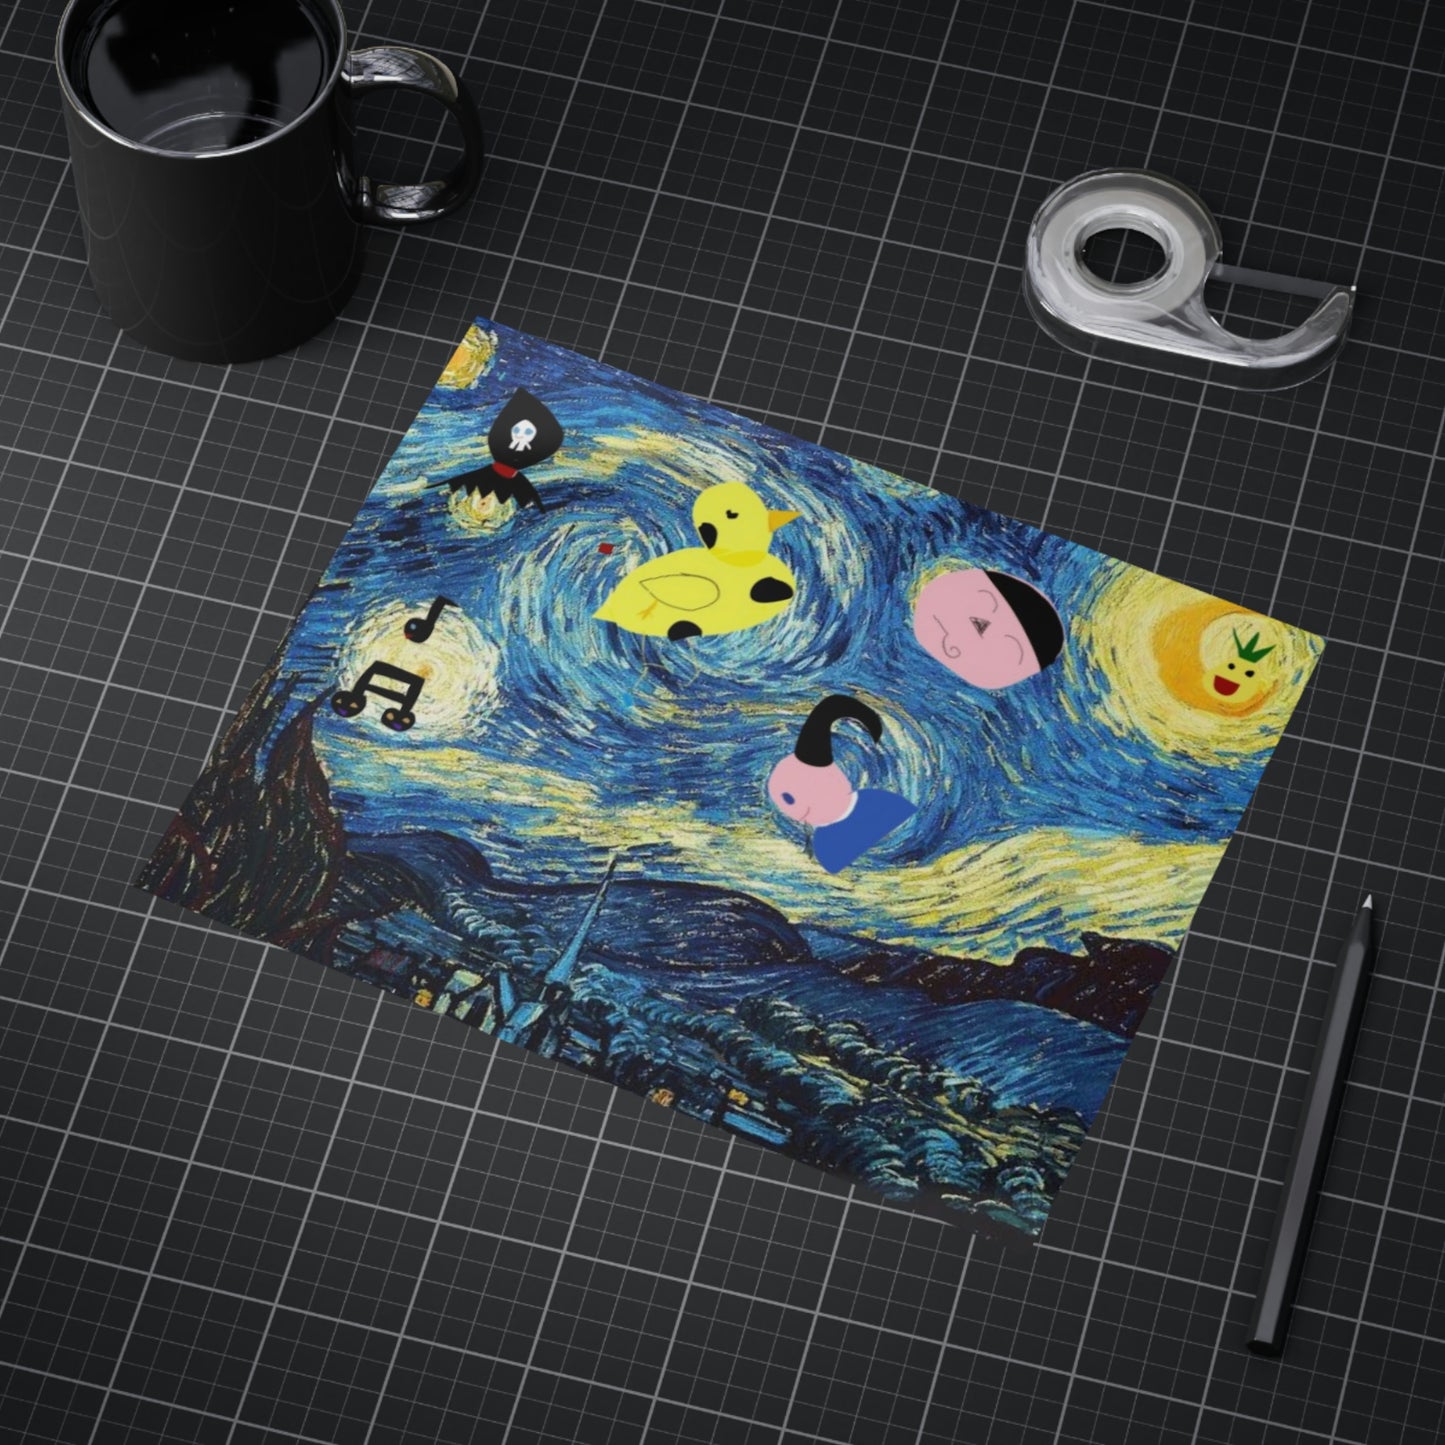 Oddly Starry Nights by D.B. print